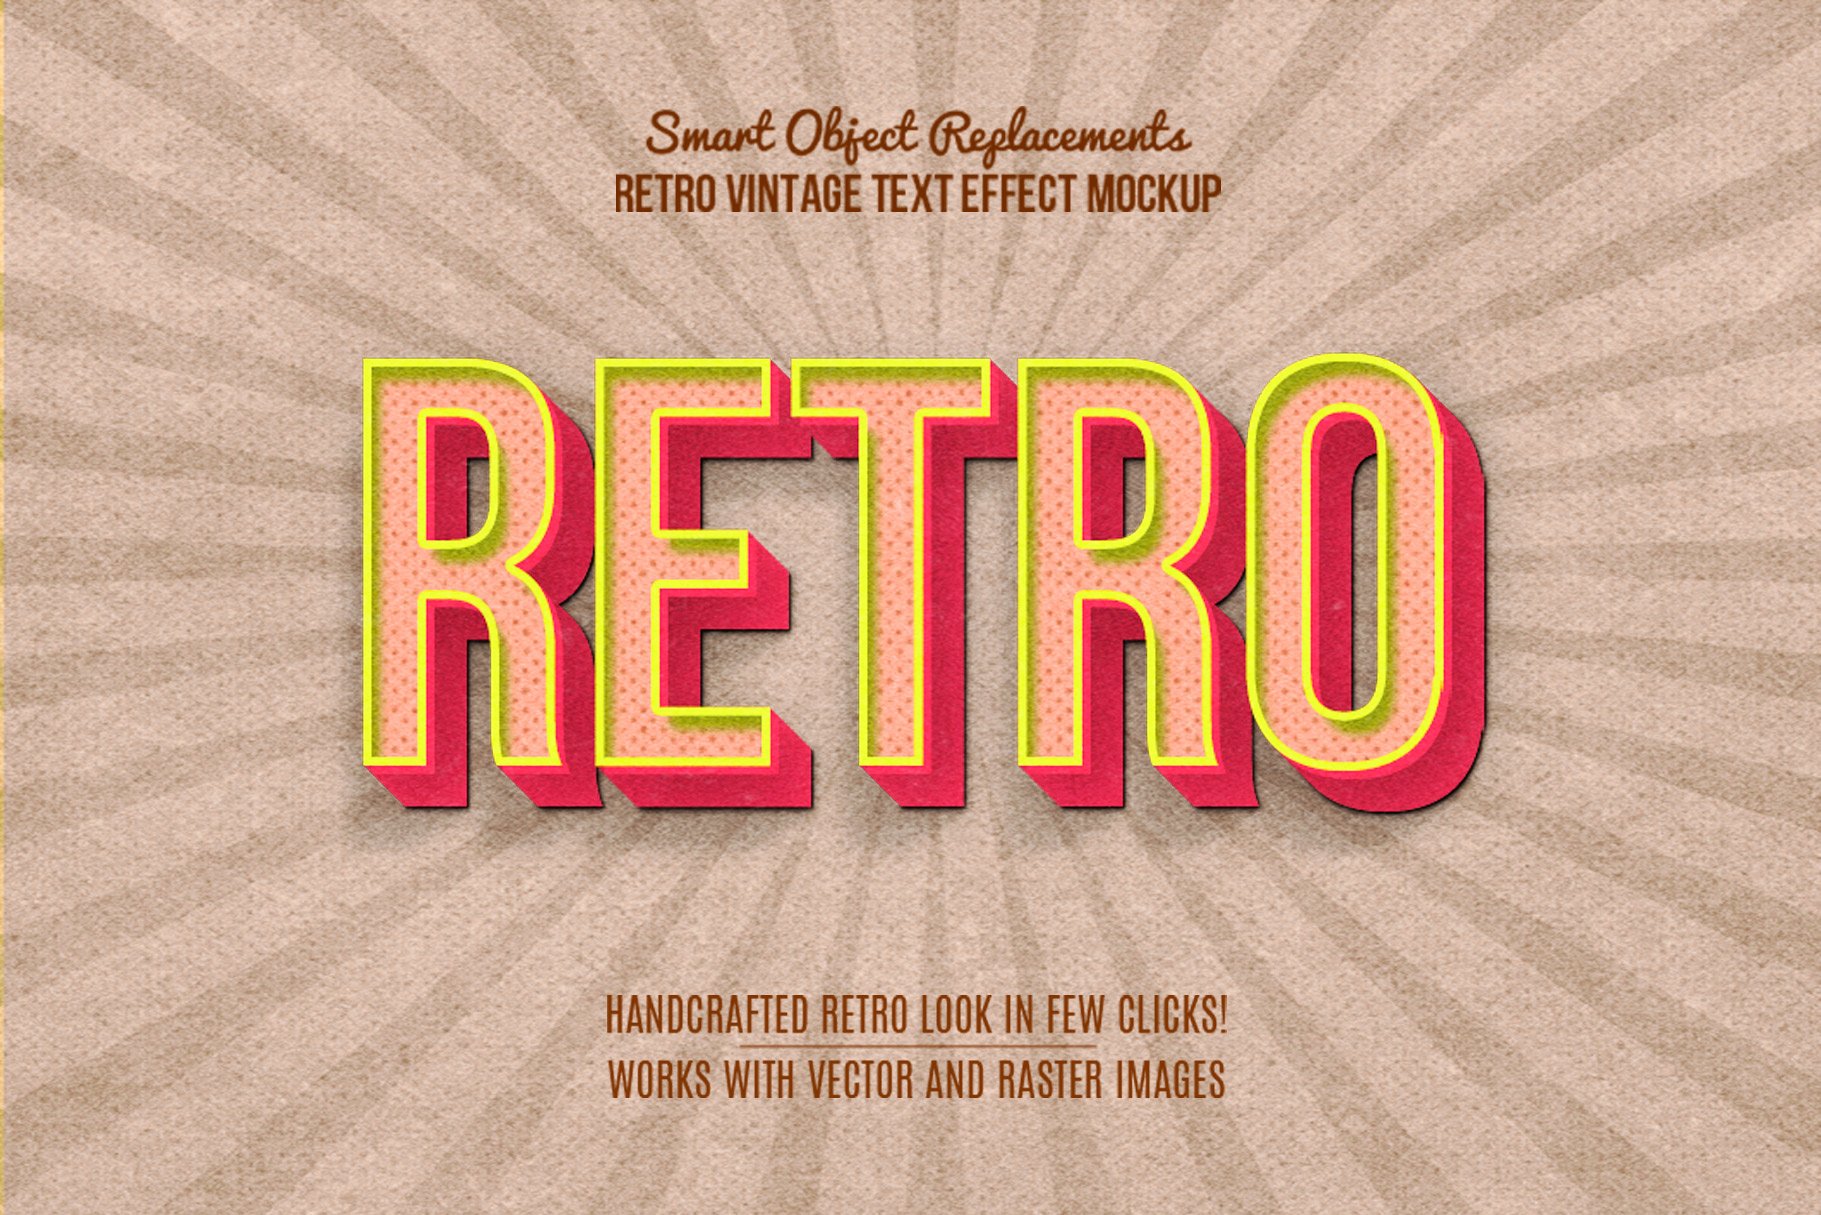 10 Retro Vintage Text Effectcover image.